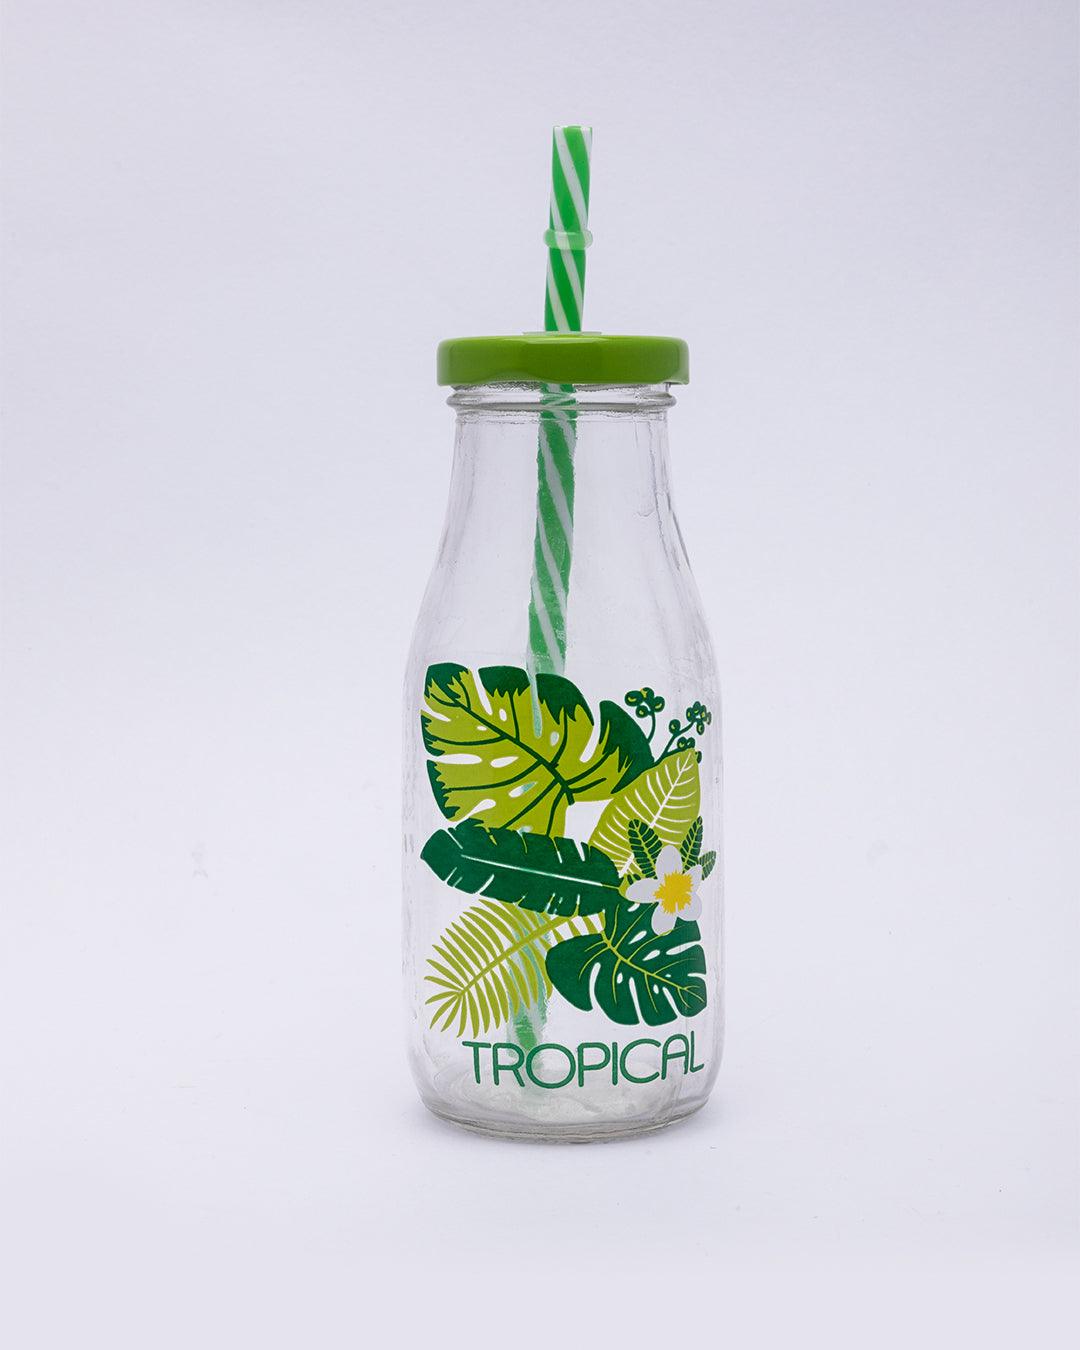 Mason Glass Sipper, Mason Jar, with Straw, Leaf Design, Green, Glass, Set Of 4, 300 mL - MARKET 99